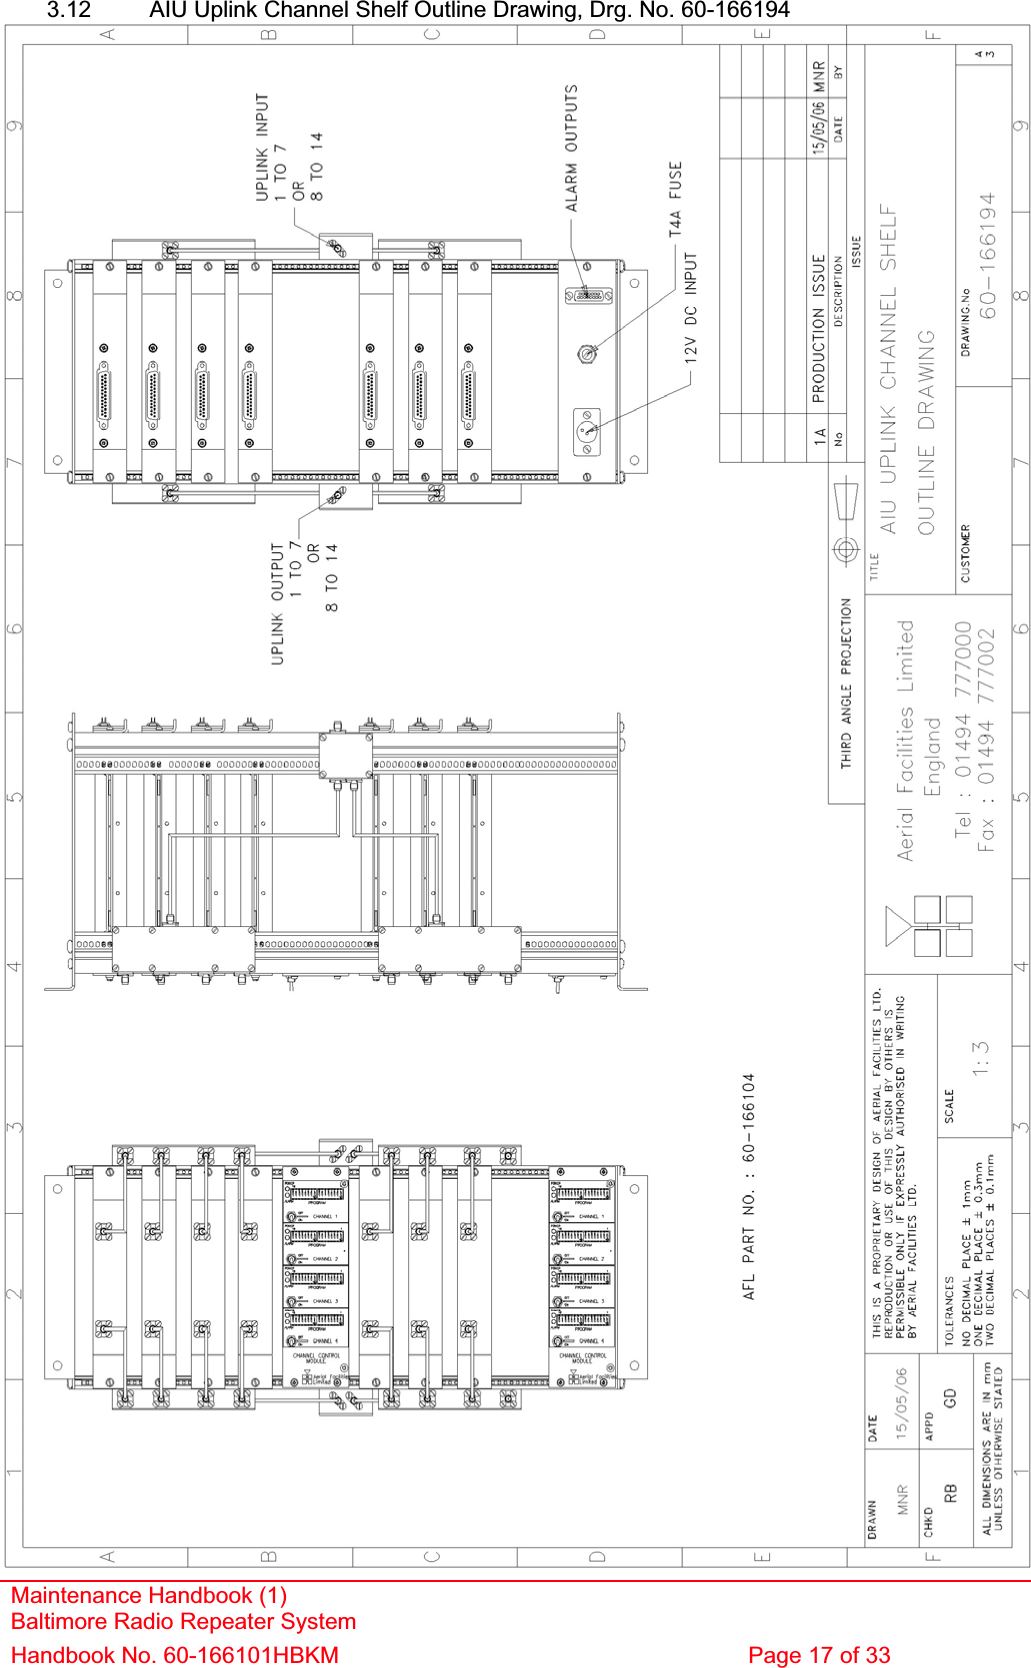 3.12  AIU Uplink Channel Shelf Outline Drawing, Drg. No. 60-166194 Maintenance Handbook (1) Baltimore Radio Repeater System Handbook No. 60-166101HBKM  Page 17 of 33 